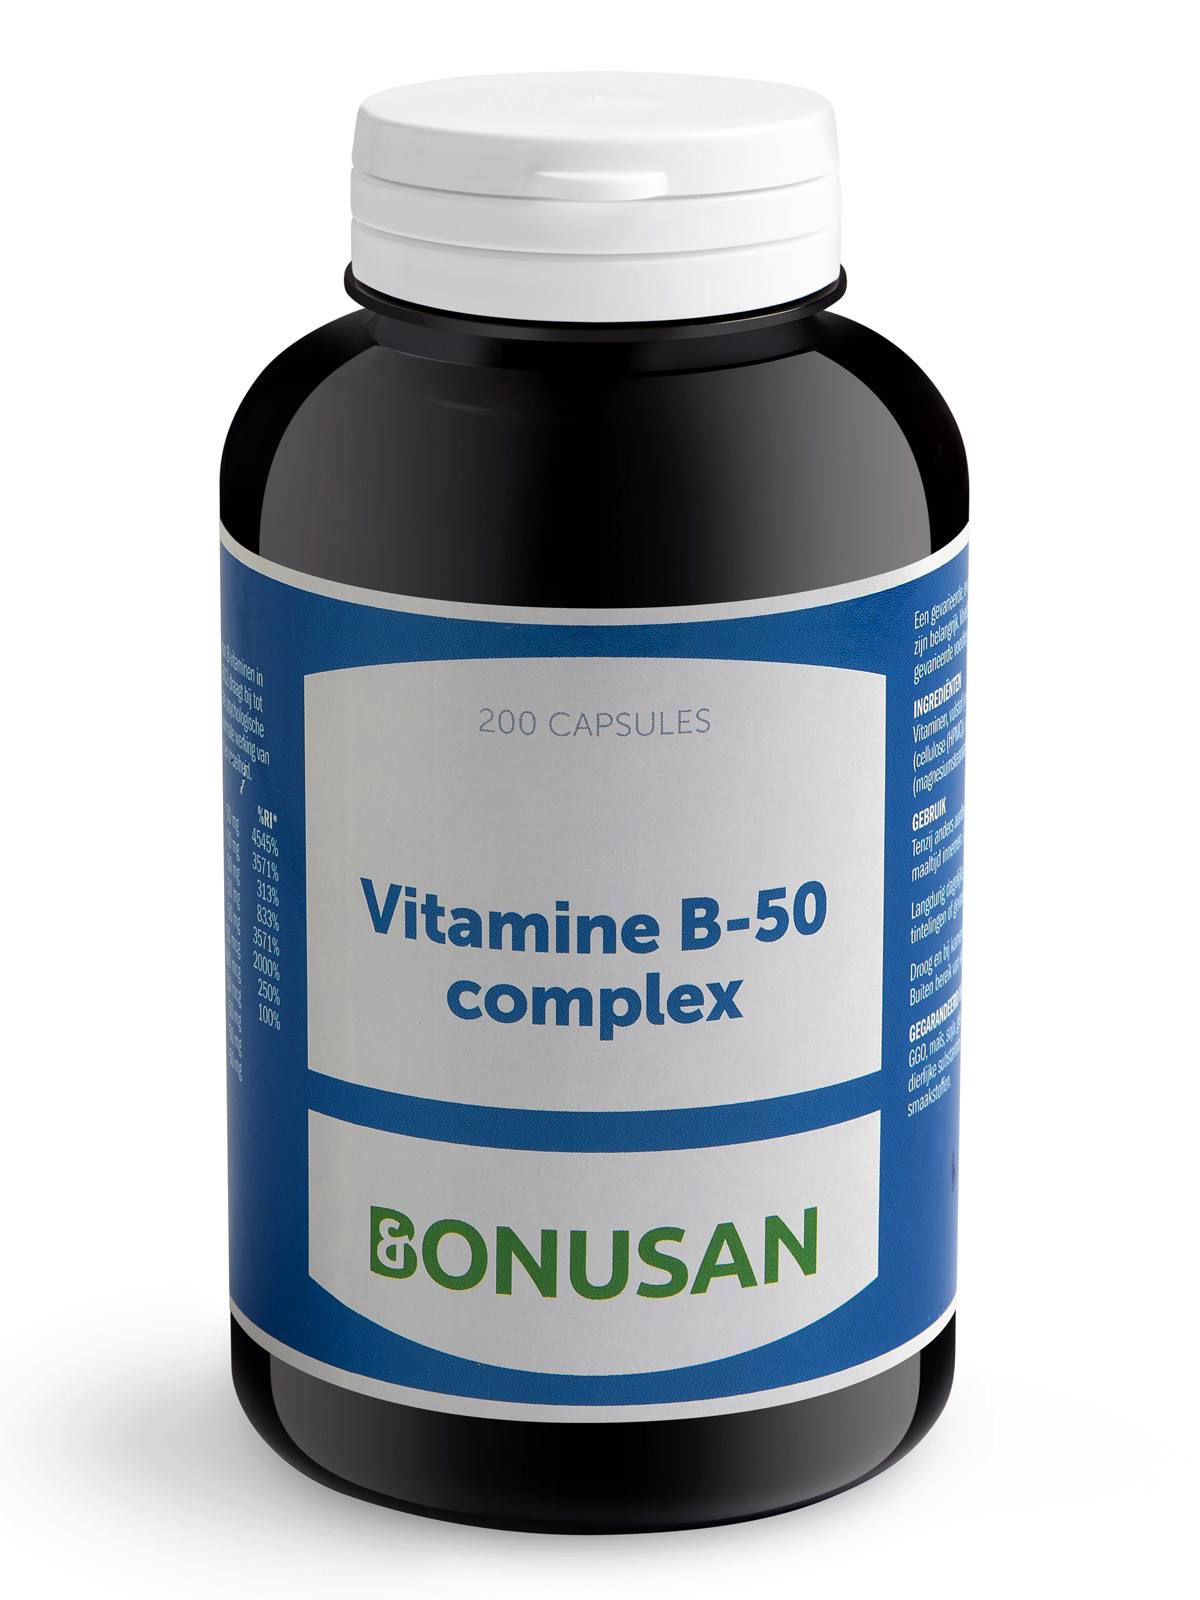 Bonusan - Vitamine B-50 Complex